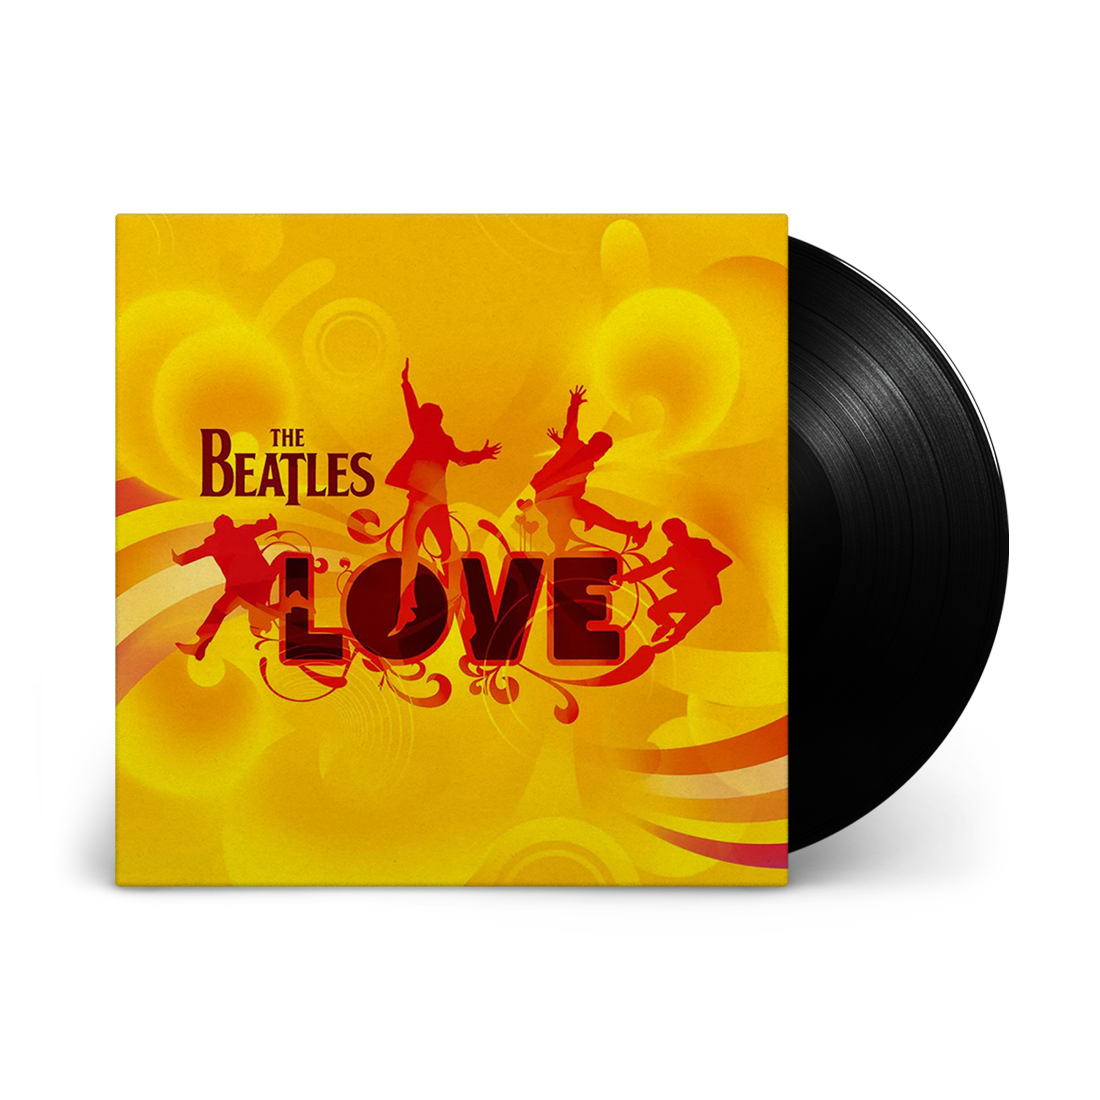 The Beatles - Love (2LP)